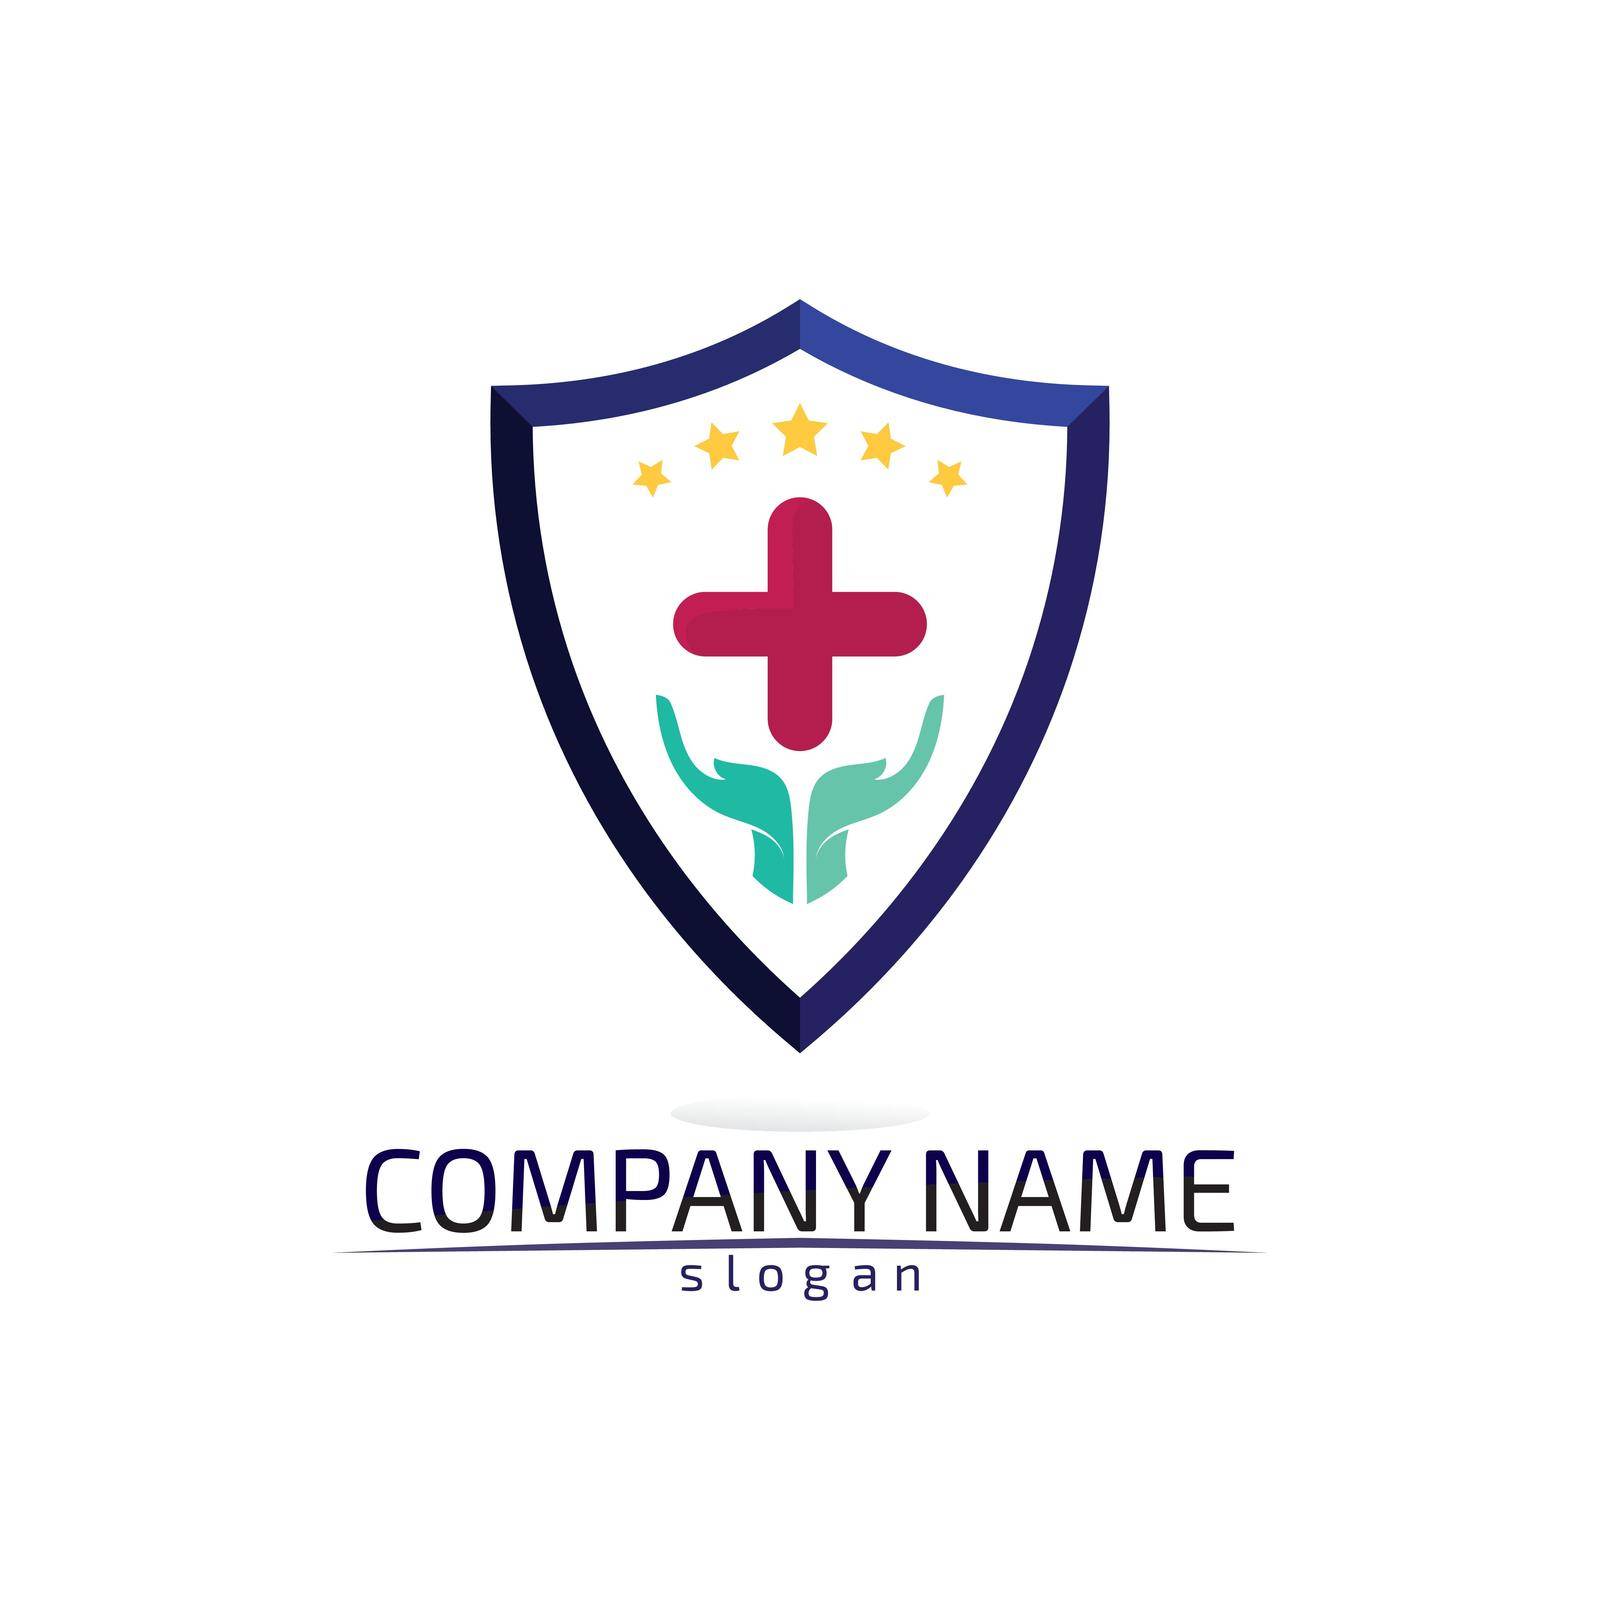 Hospital logo and symbols template icons app by Anggasaputro